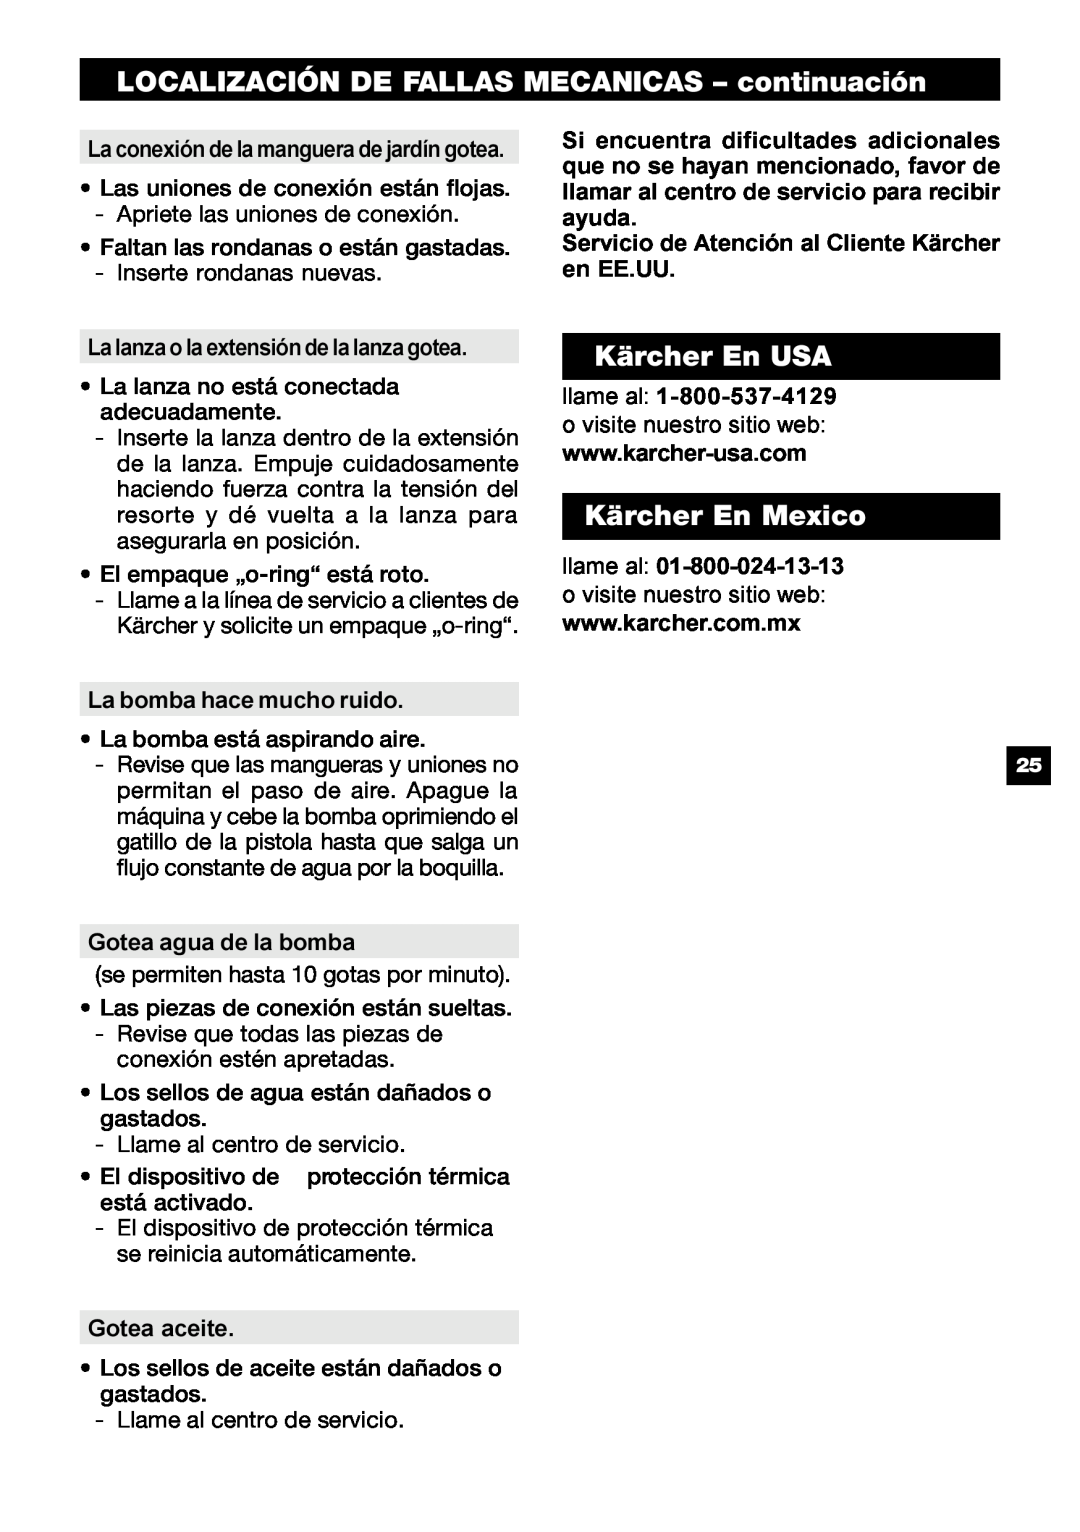 Karcher G 2650 HH manual LOCALIZACIÓN DE FALLAS MECANICAS - continuación, Kärcher En USA, Kärcher En Mexico, DG1061K1F6 